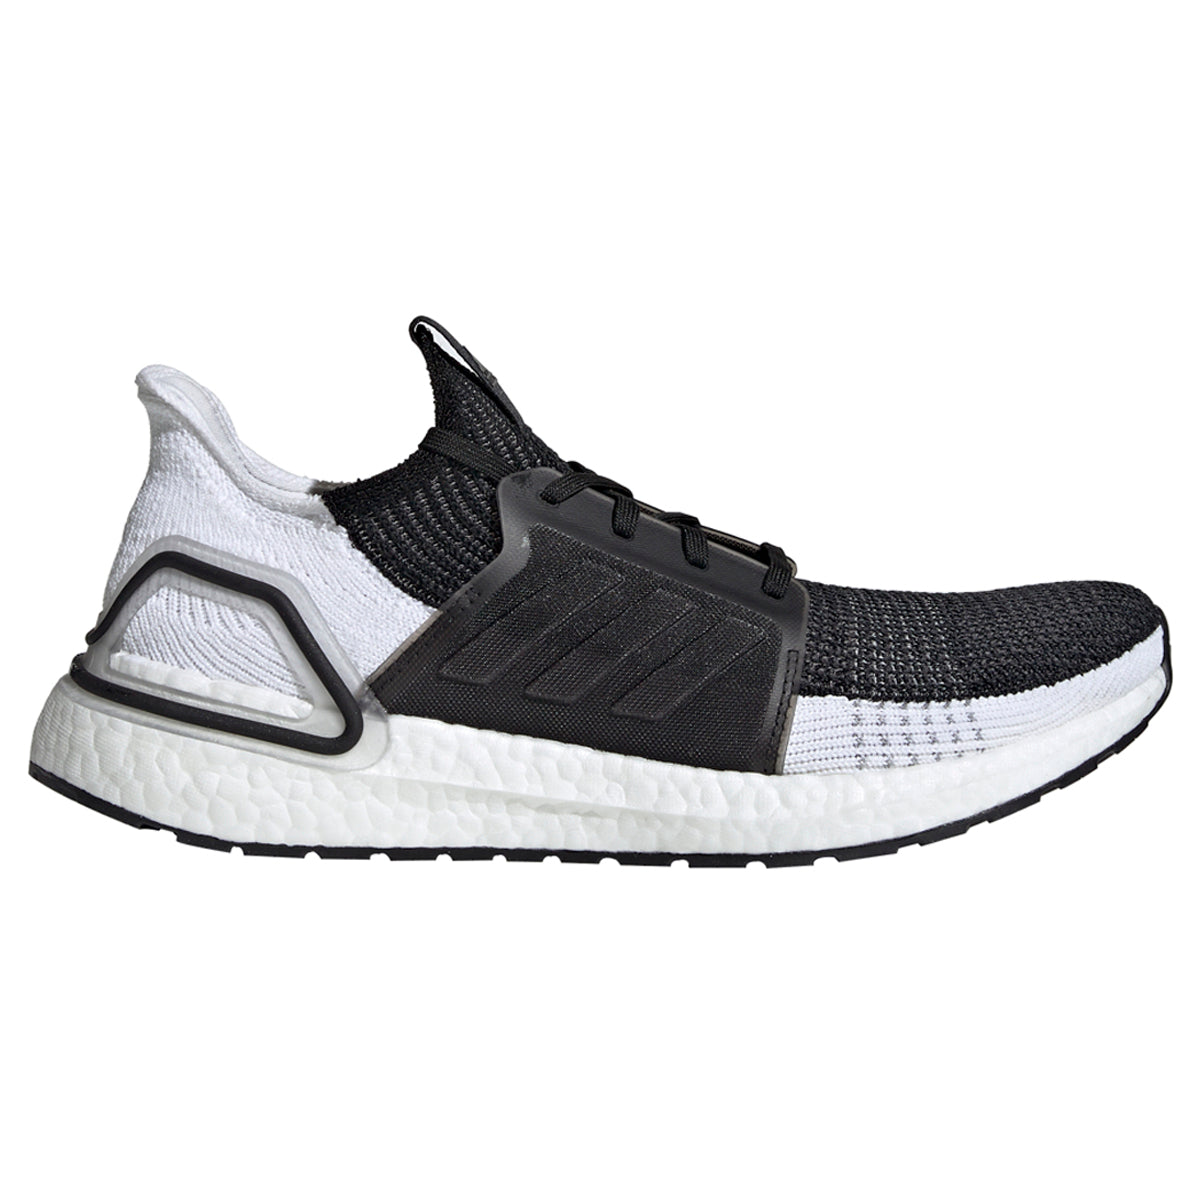 Adidas Men's Ultra Boost 2019 Running Shoe - Black / White - B37704 – Sporting Goods